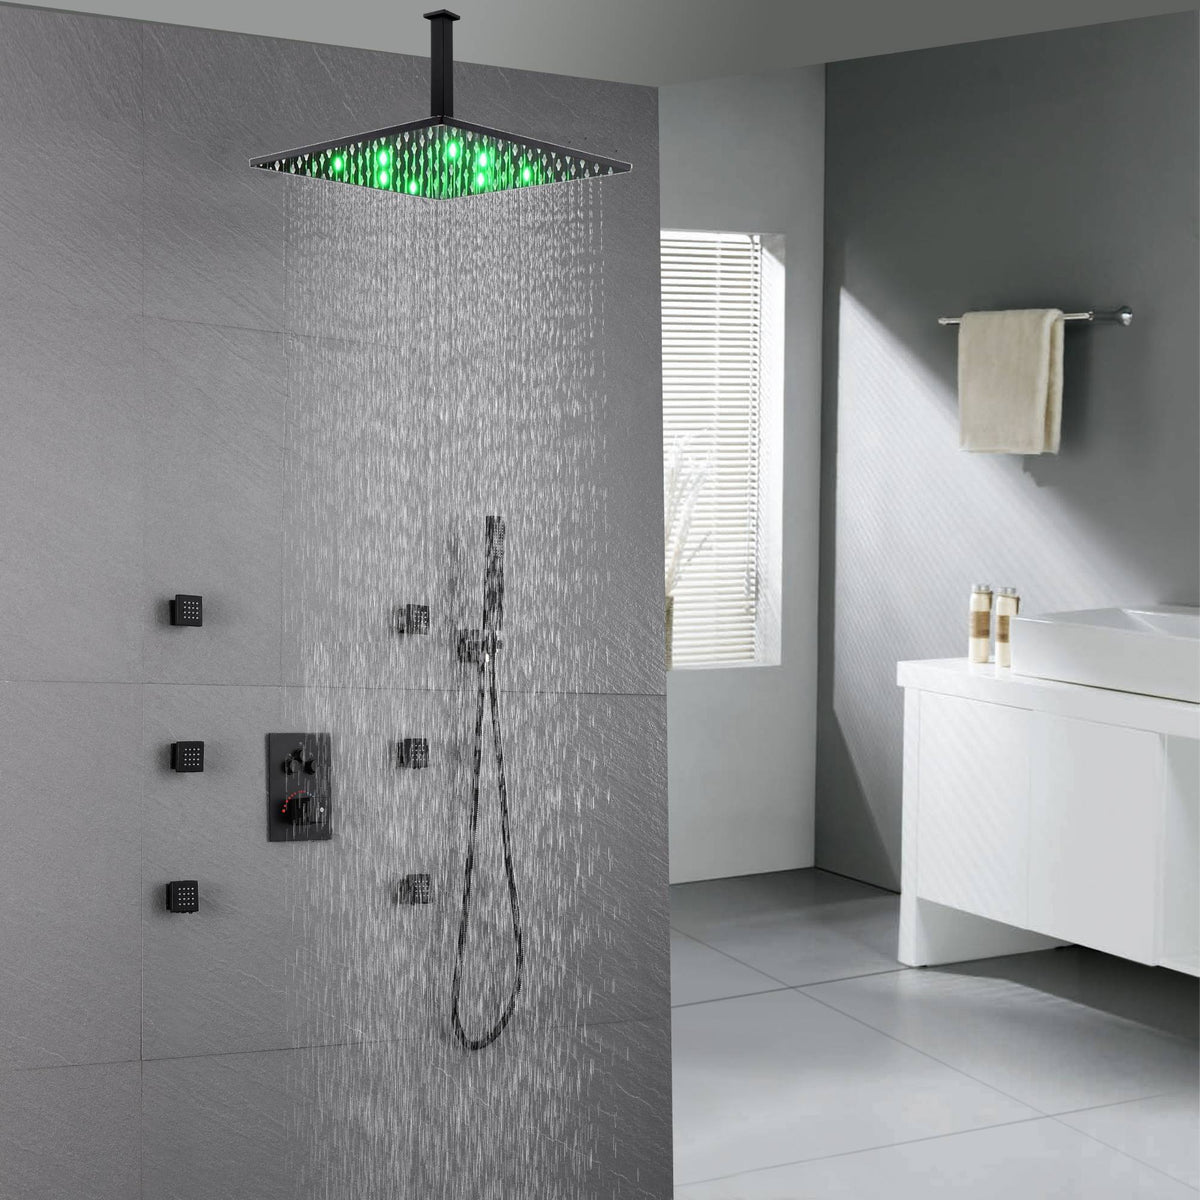 Ceiling Mount Shower System, 12-Inch Bathroom Luxury Rain Mixer Shower